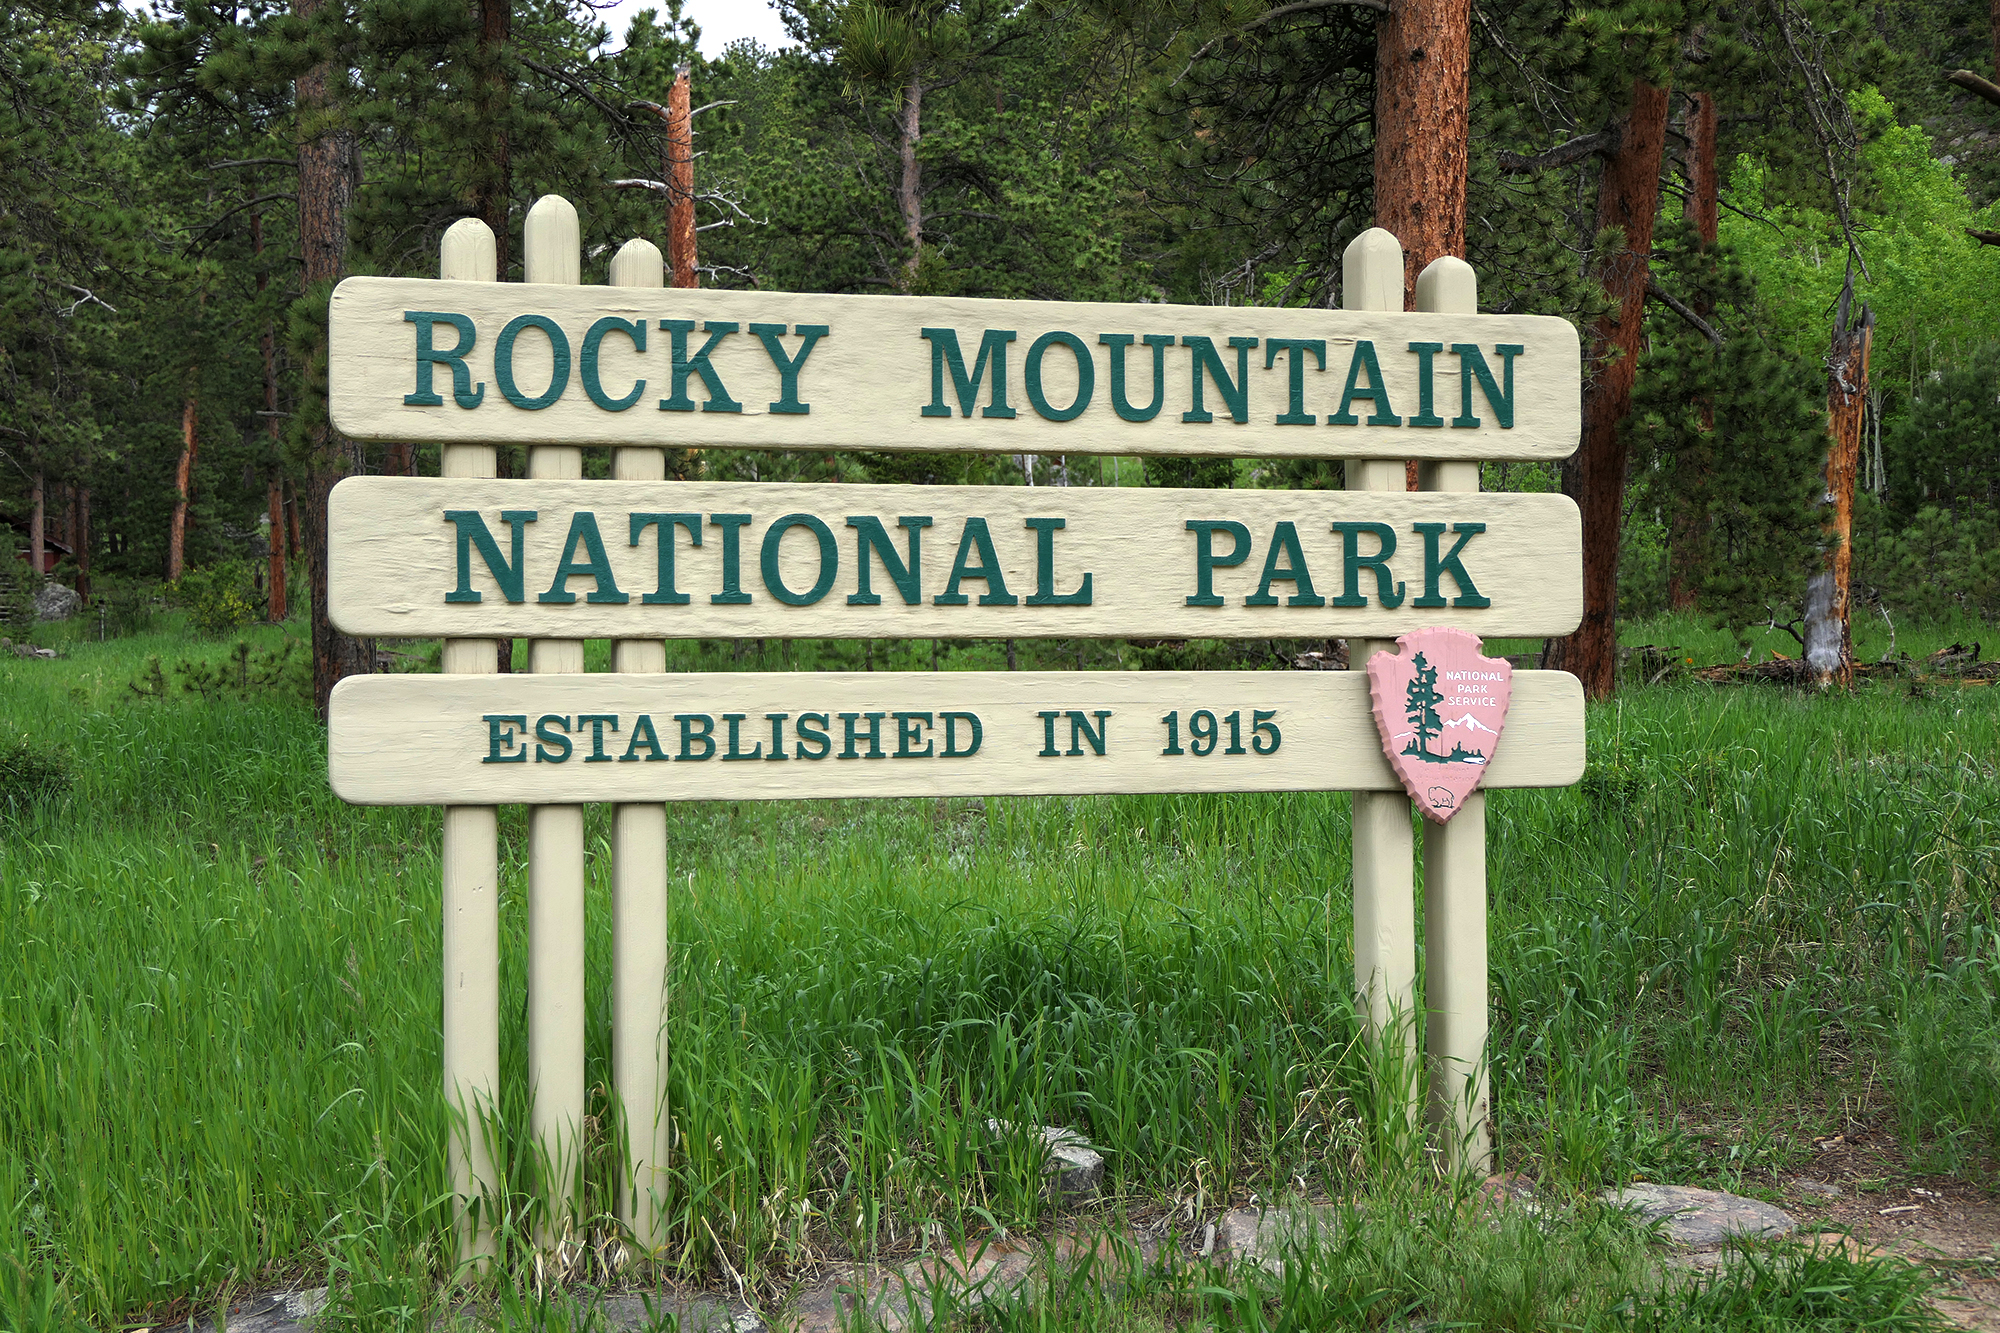 Next up, Rocky Mountain National Park